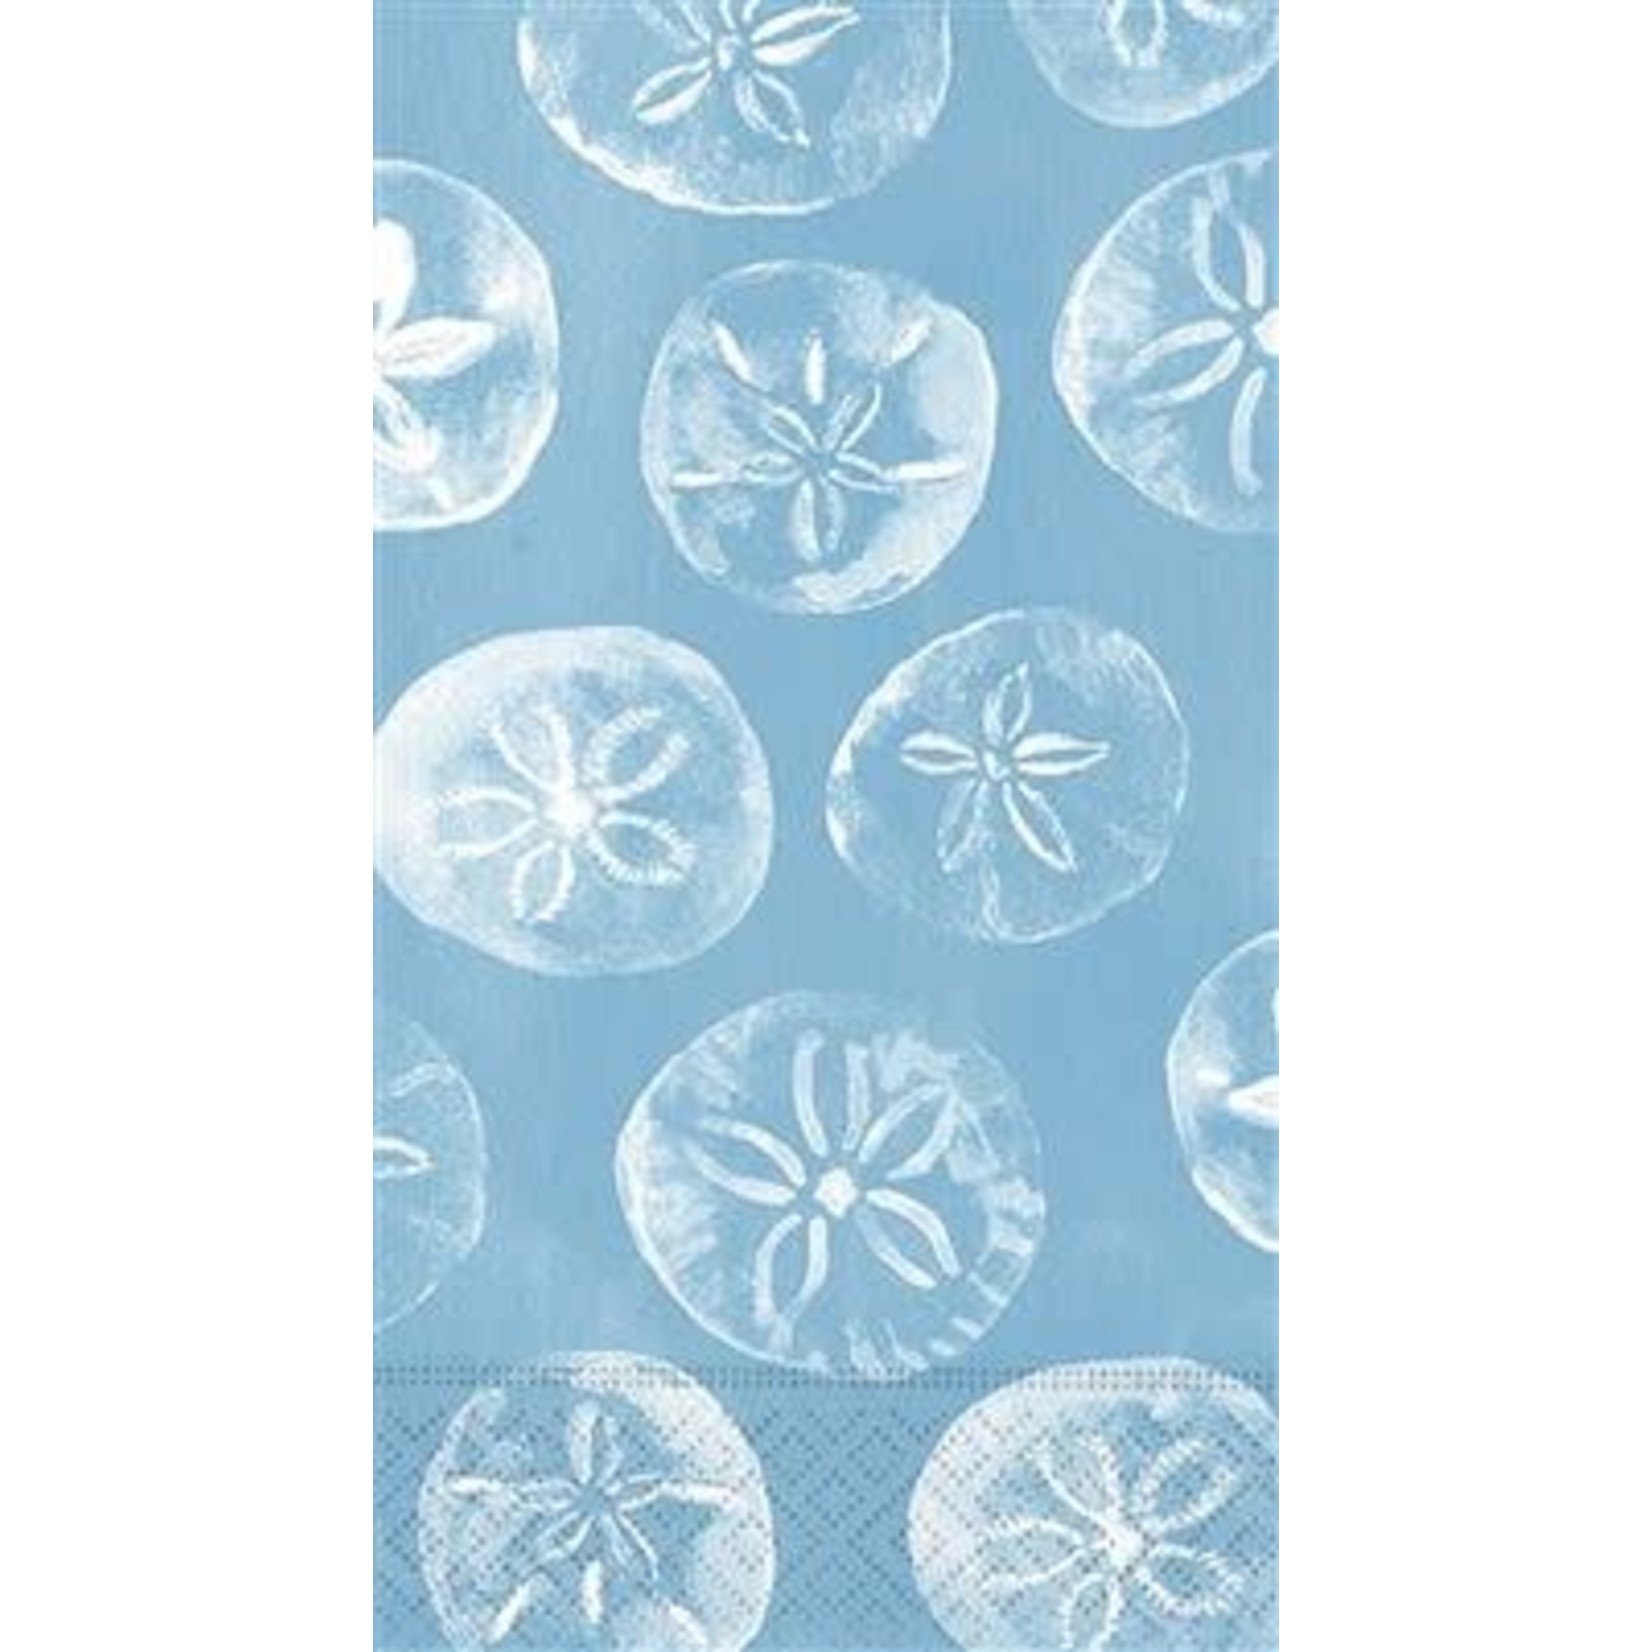 design design Blue Sand Dollar Guest Towels - 15ct.